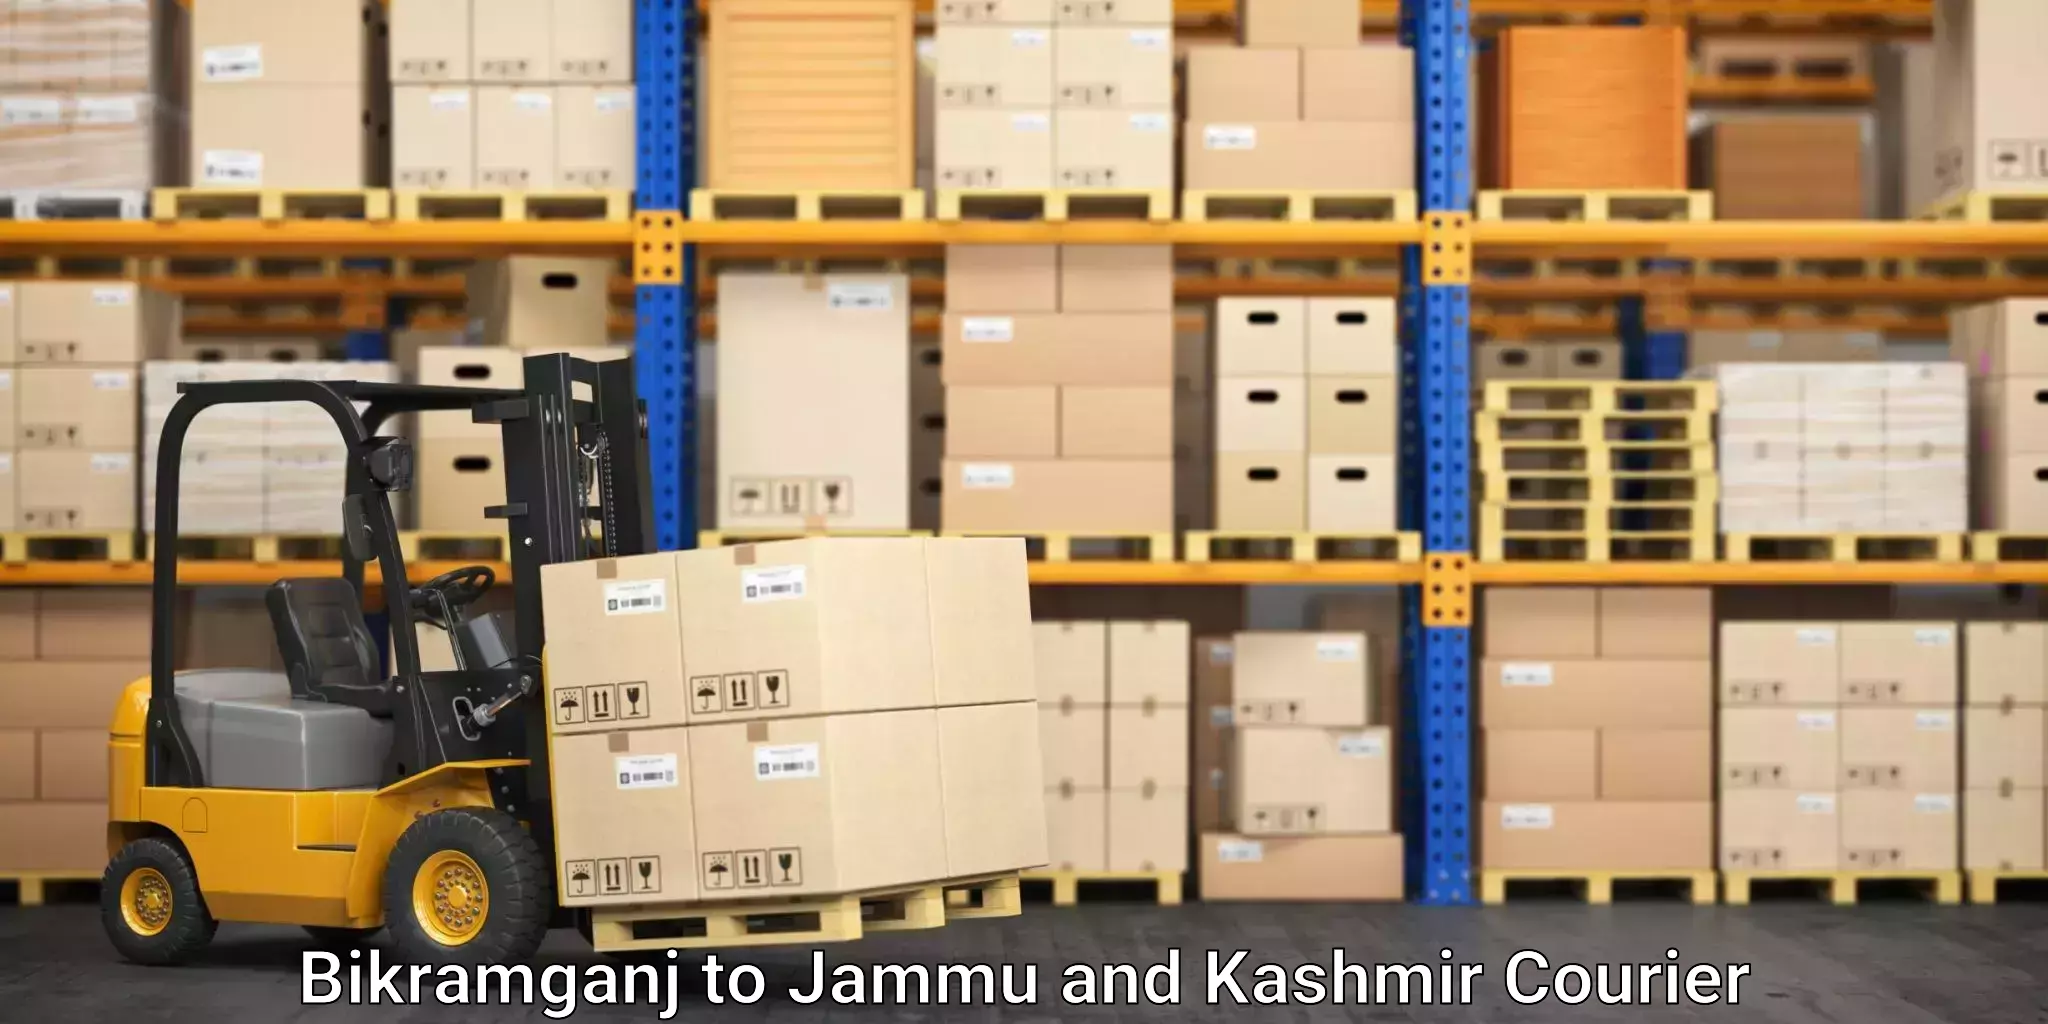 Professional moving company Bikramganj to Srinagar Kashmir